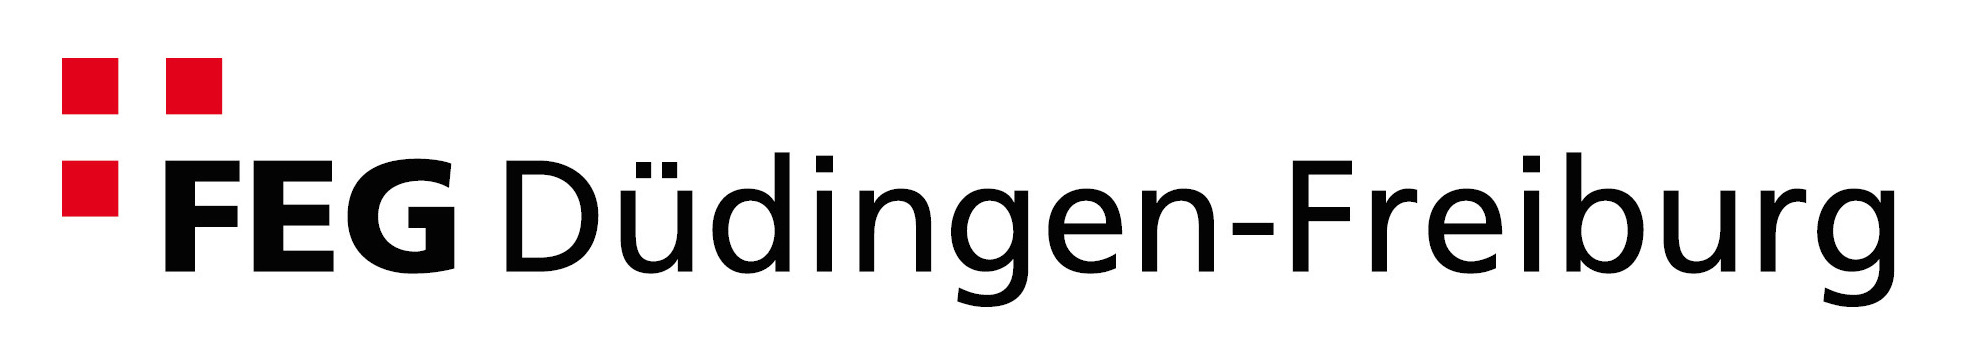 Logo - FEG Düdingen-Freiburg